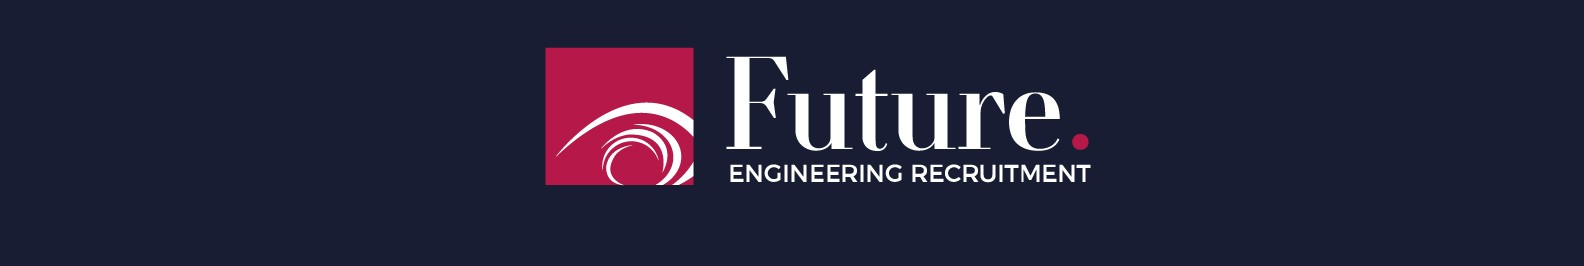 Future Engineering Recruitment Ltd background